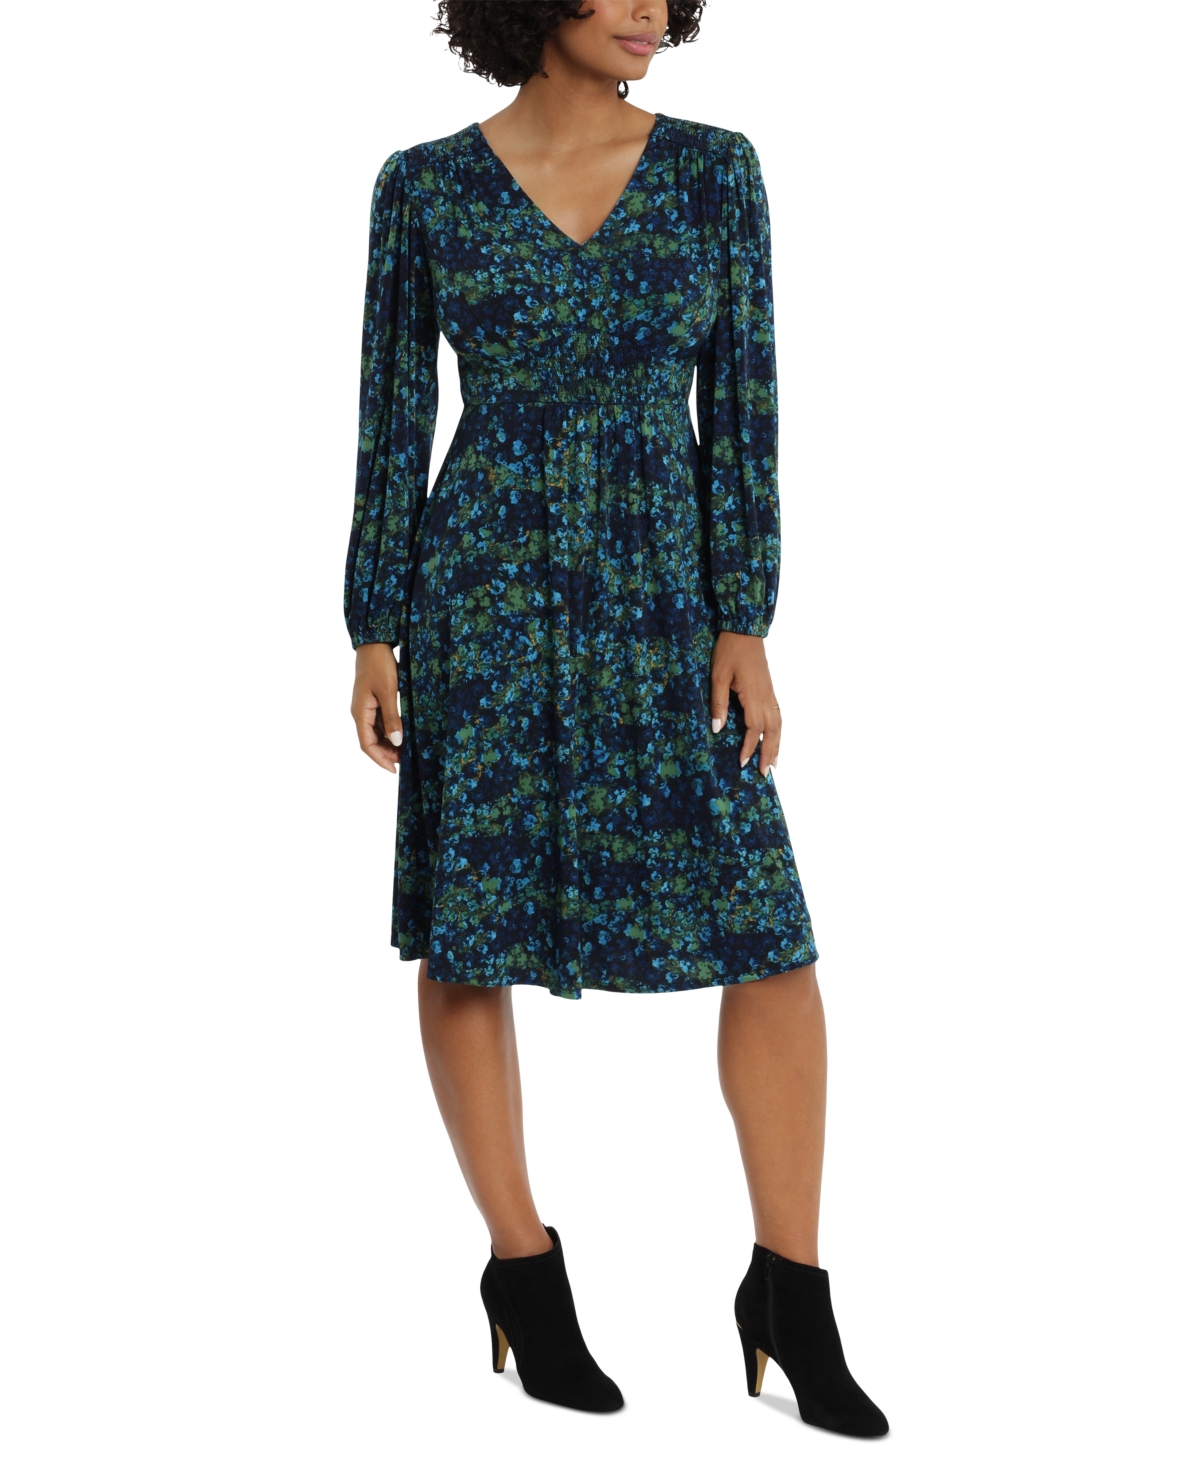 Women's Smocked Fit & Flare Dress - Navy/Blue